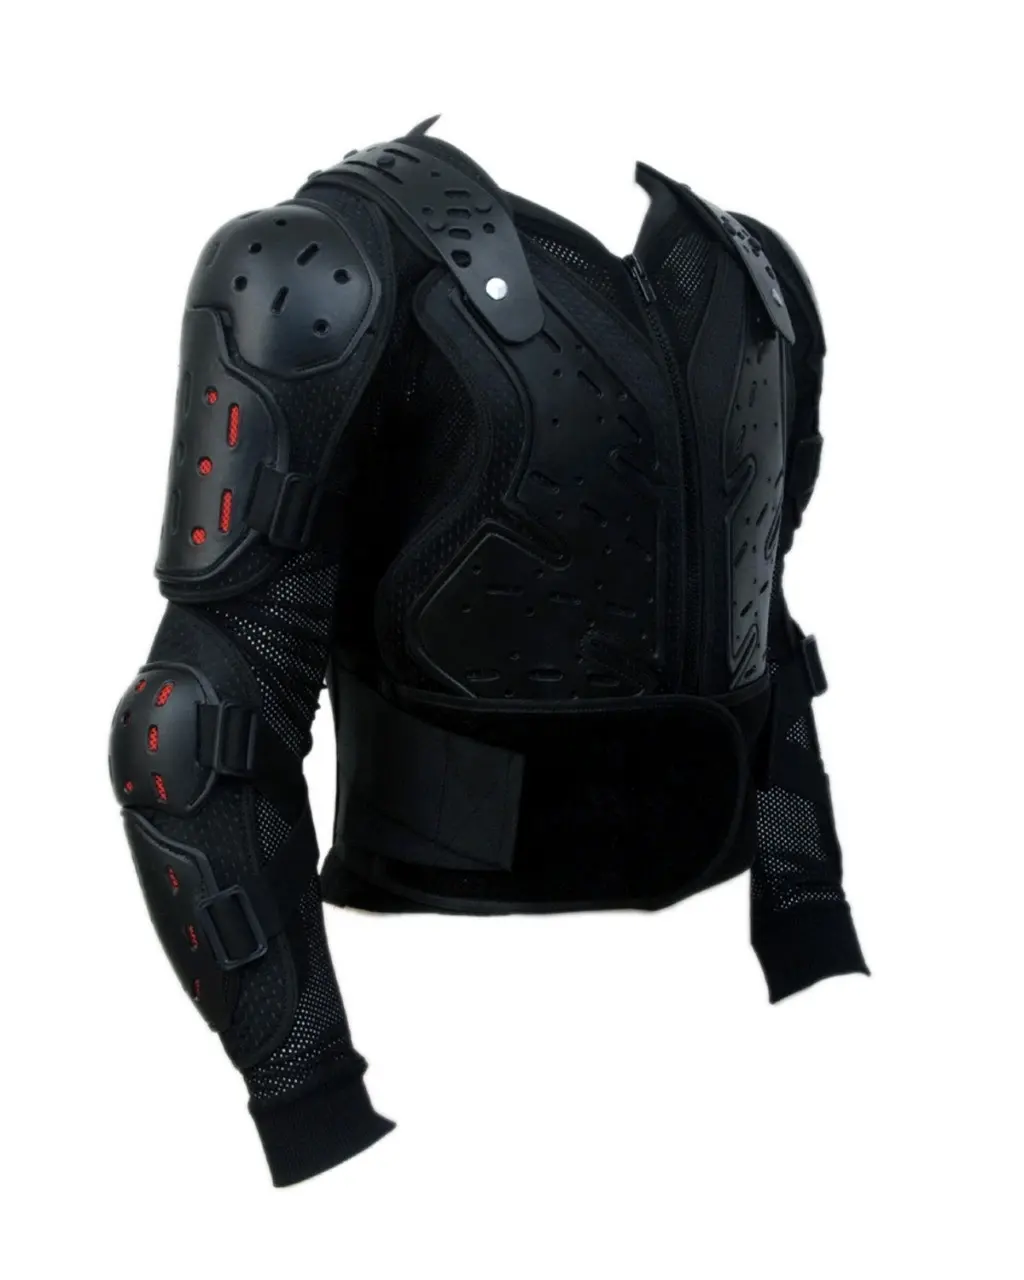 Armadura corporal de carreras para Motocross, equipo de seguridad para motocicleta, chaqueta protectora para motorista